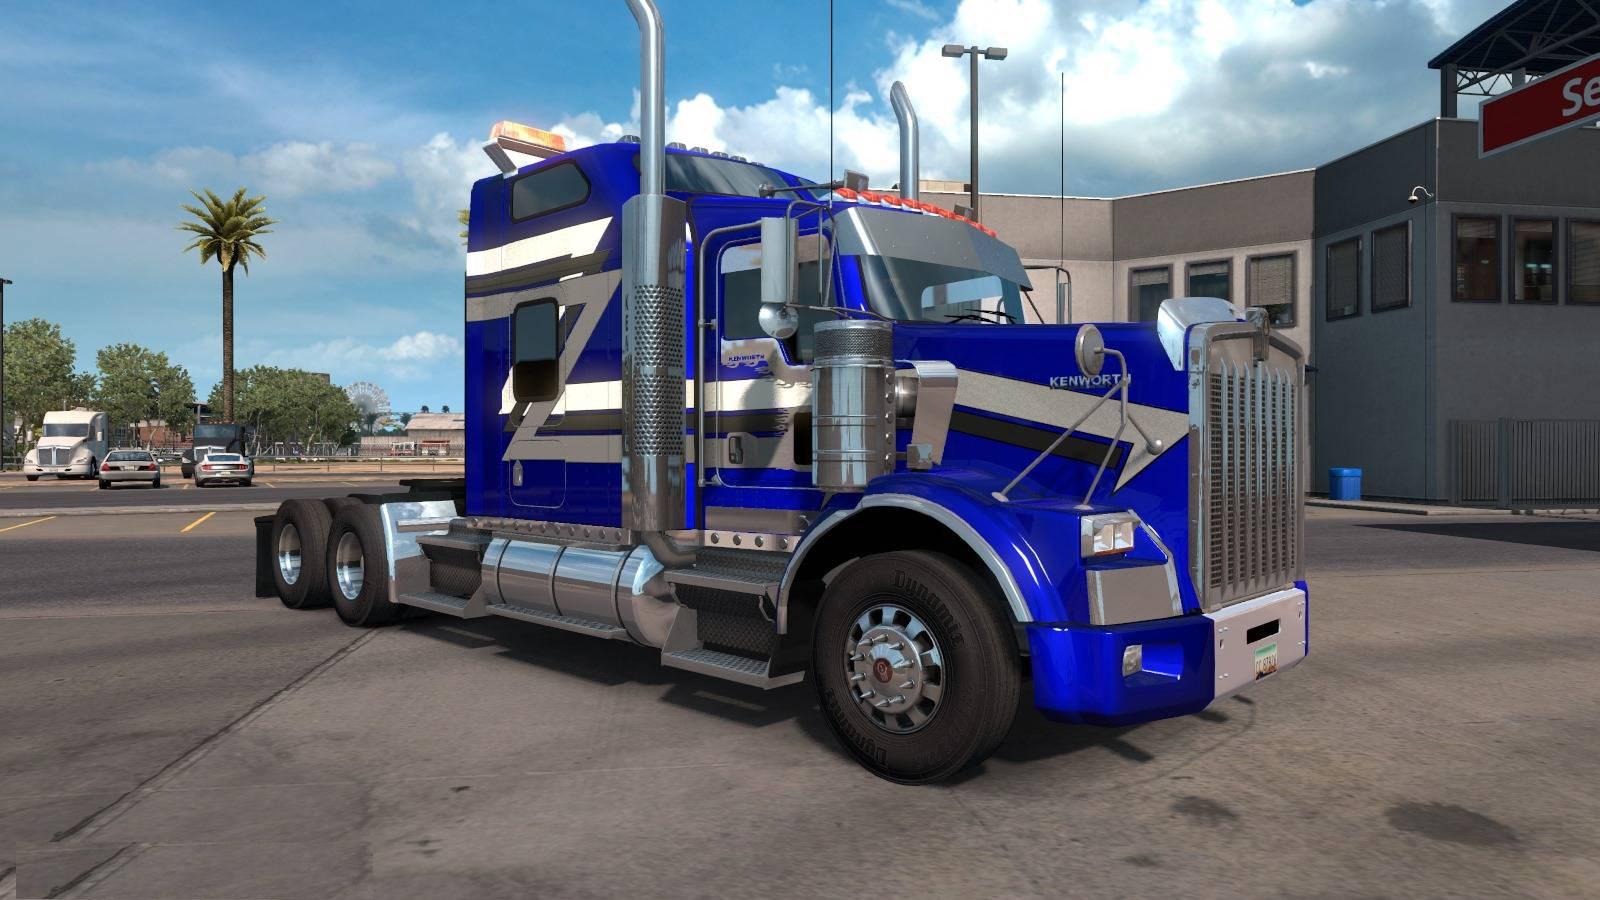 Ats Kenworth T800 2016 Dx 11 135x American Truck Simulator Modsclub